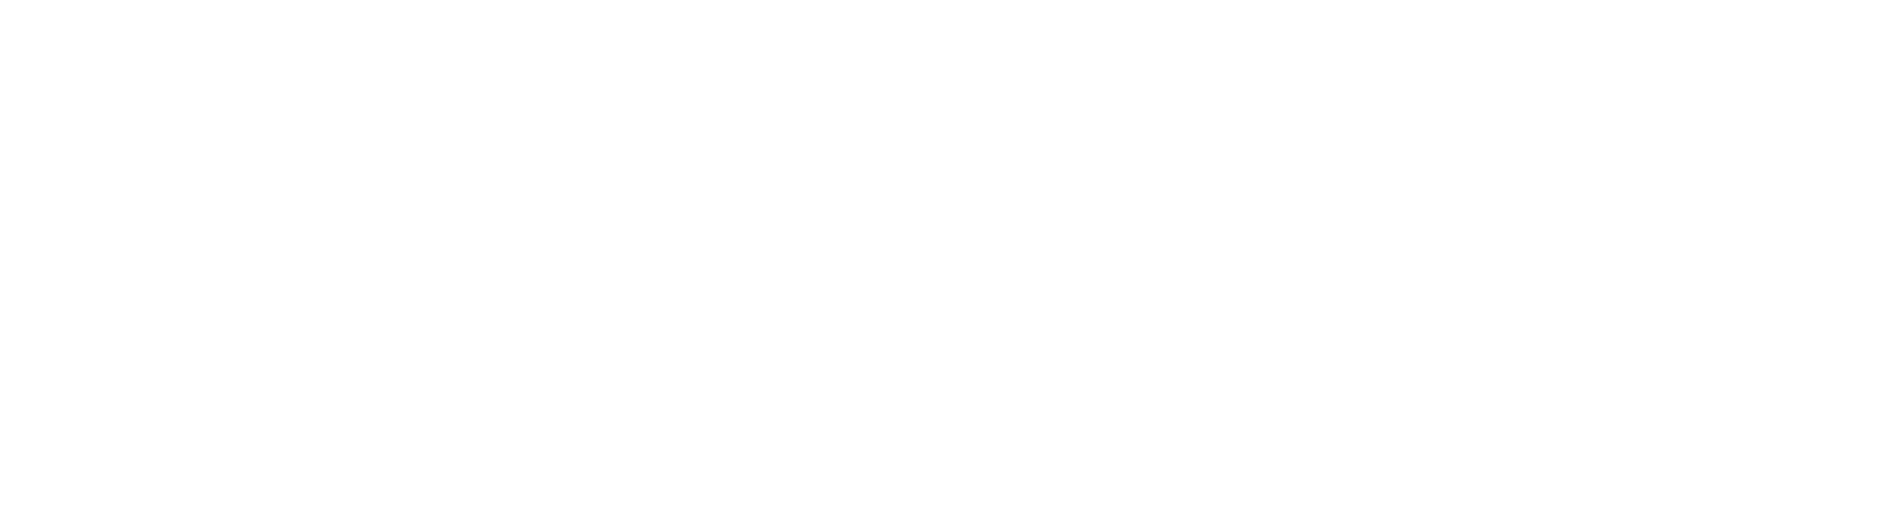 Vuxid logo